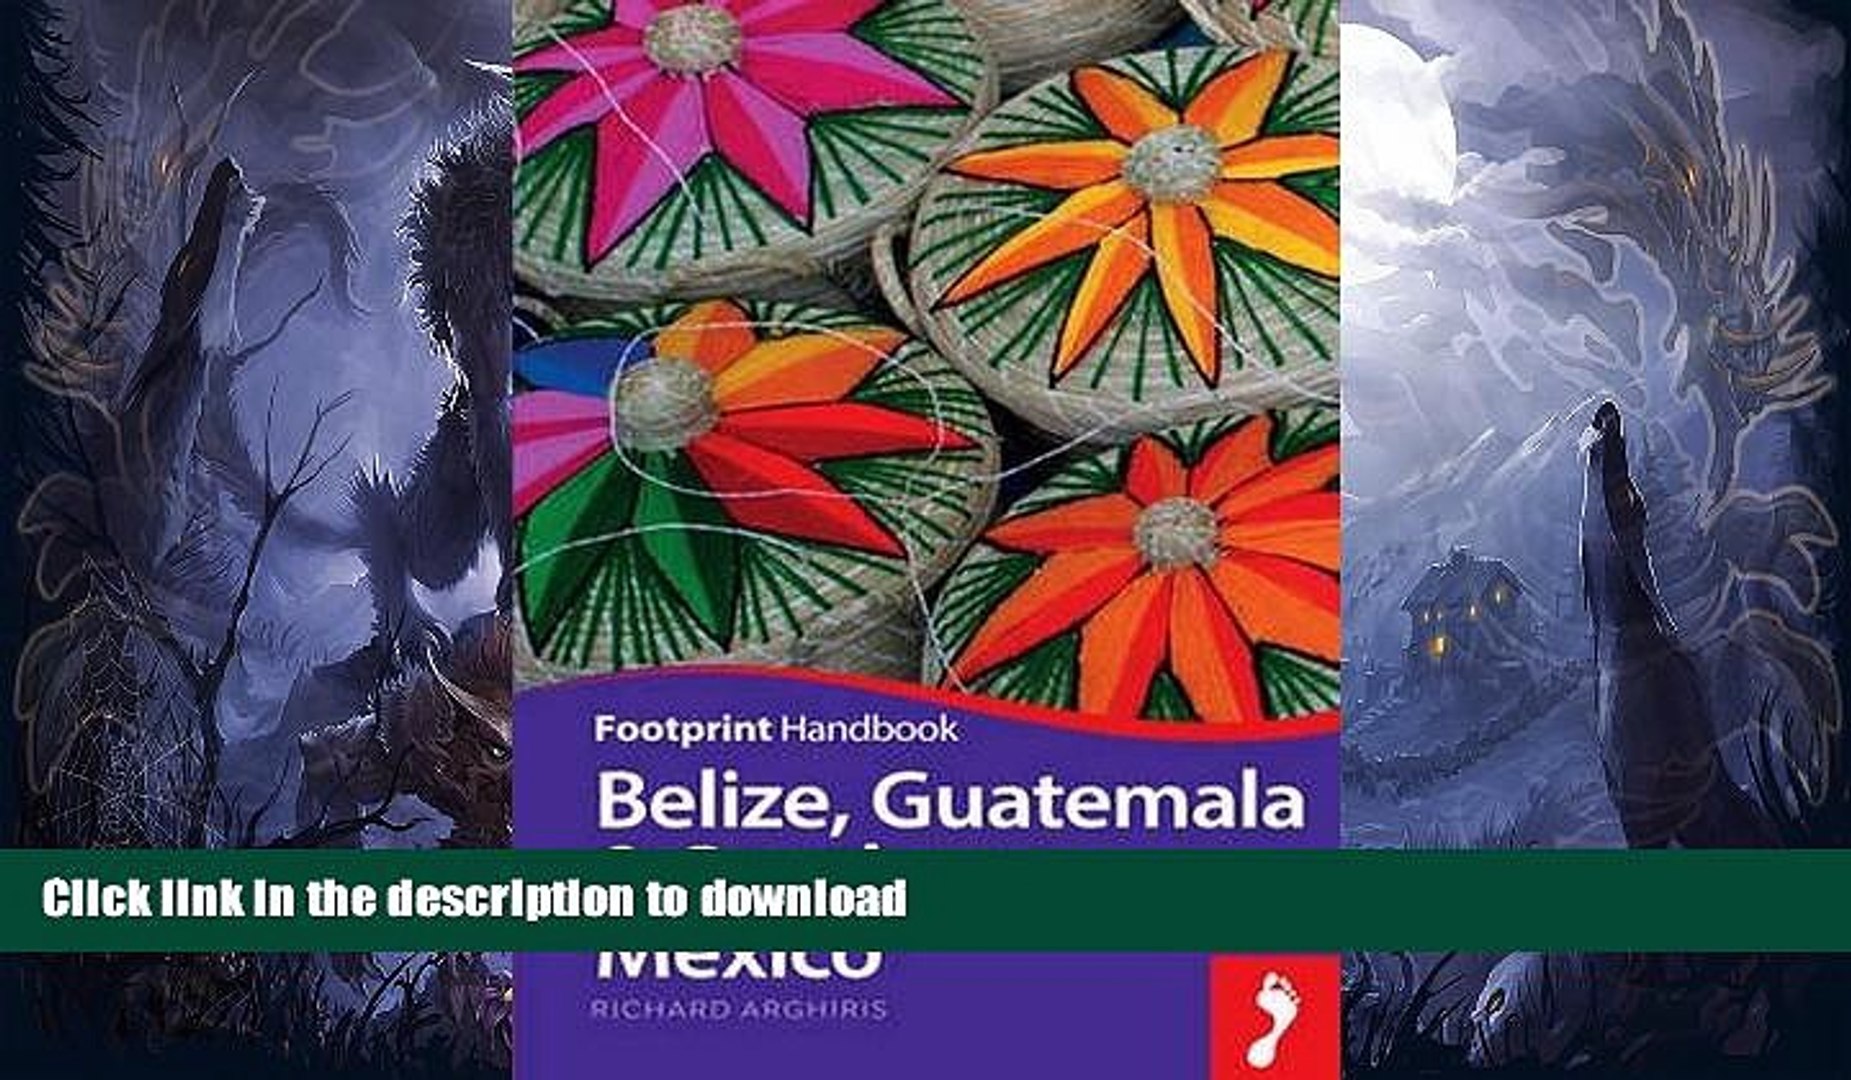 Guatemala Handbook